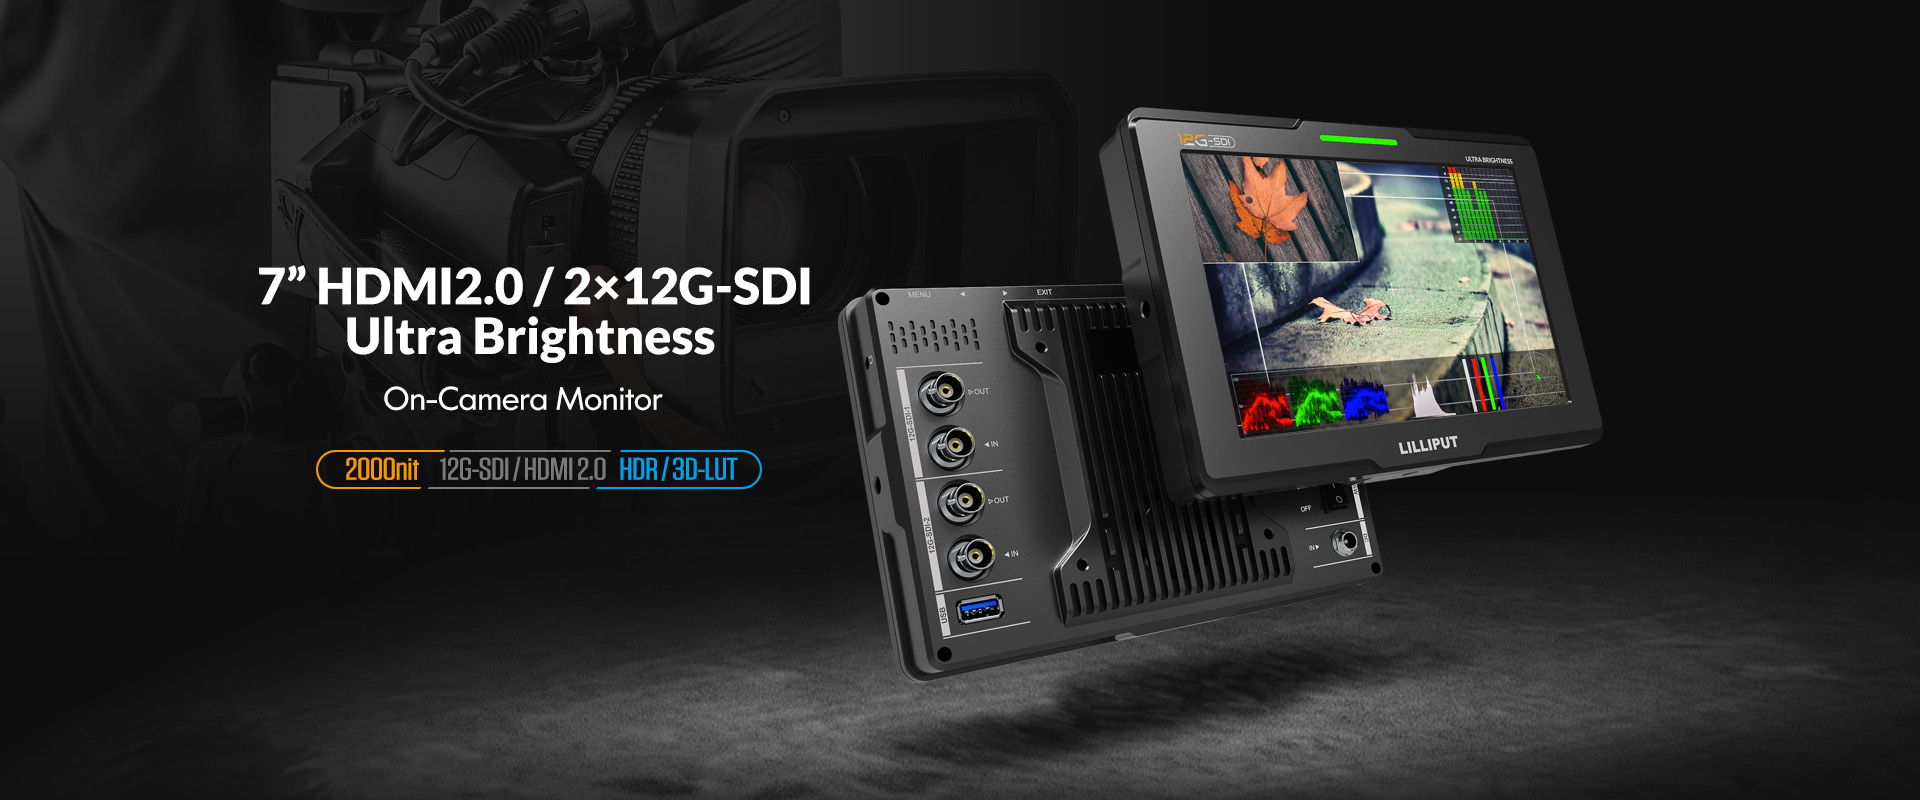 Monitor kamera atas 12G-SDI 7 inci